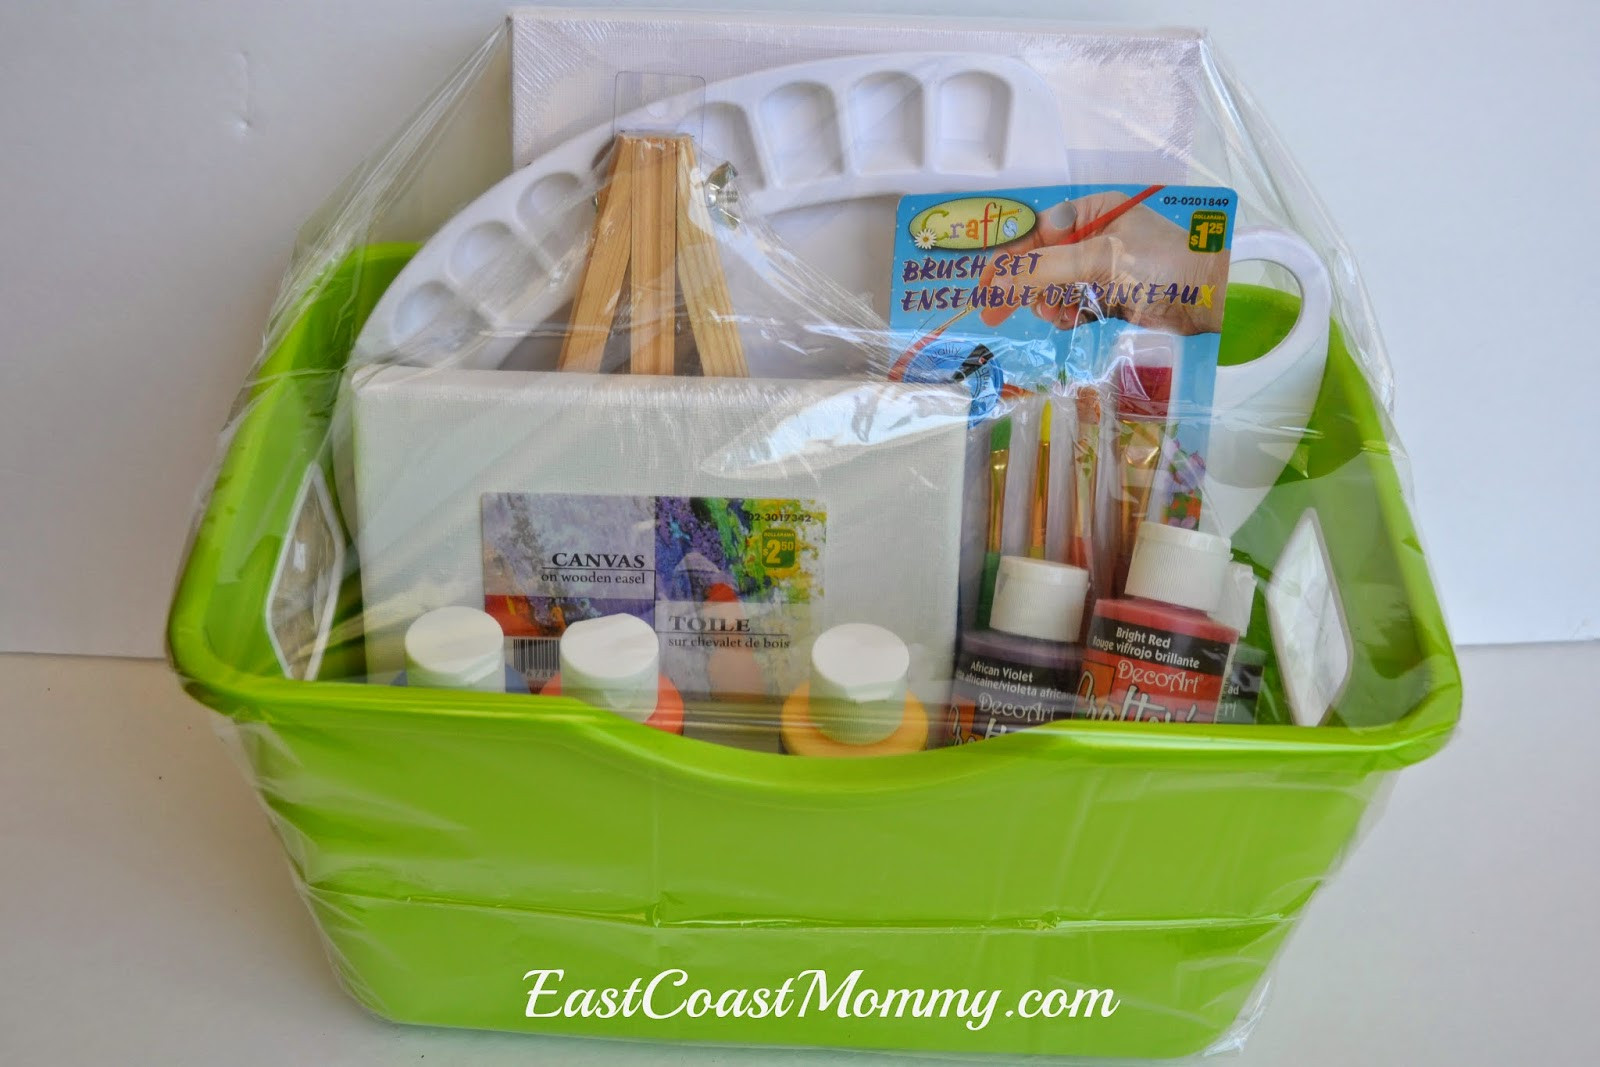 Gift Basket Ideas For Kids
 East Coast Mommy 5 DIY Gift Basket Ideas for kids